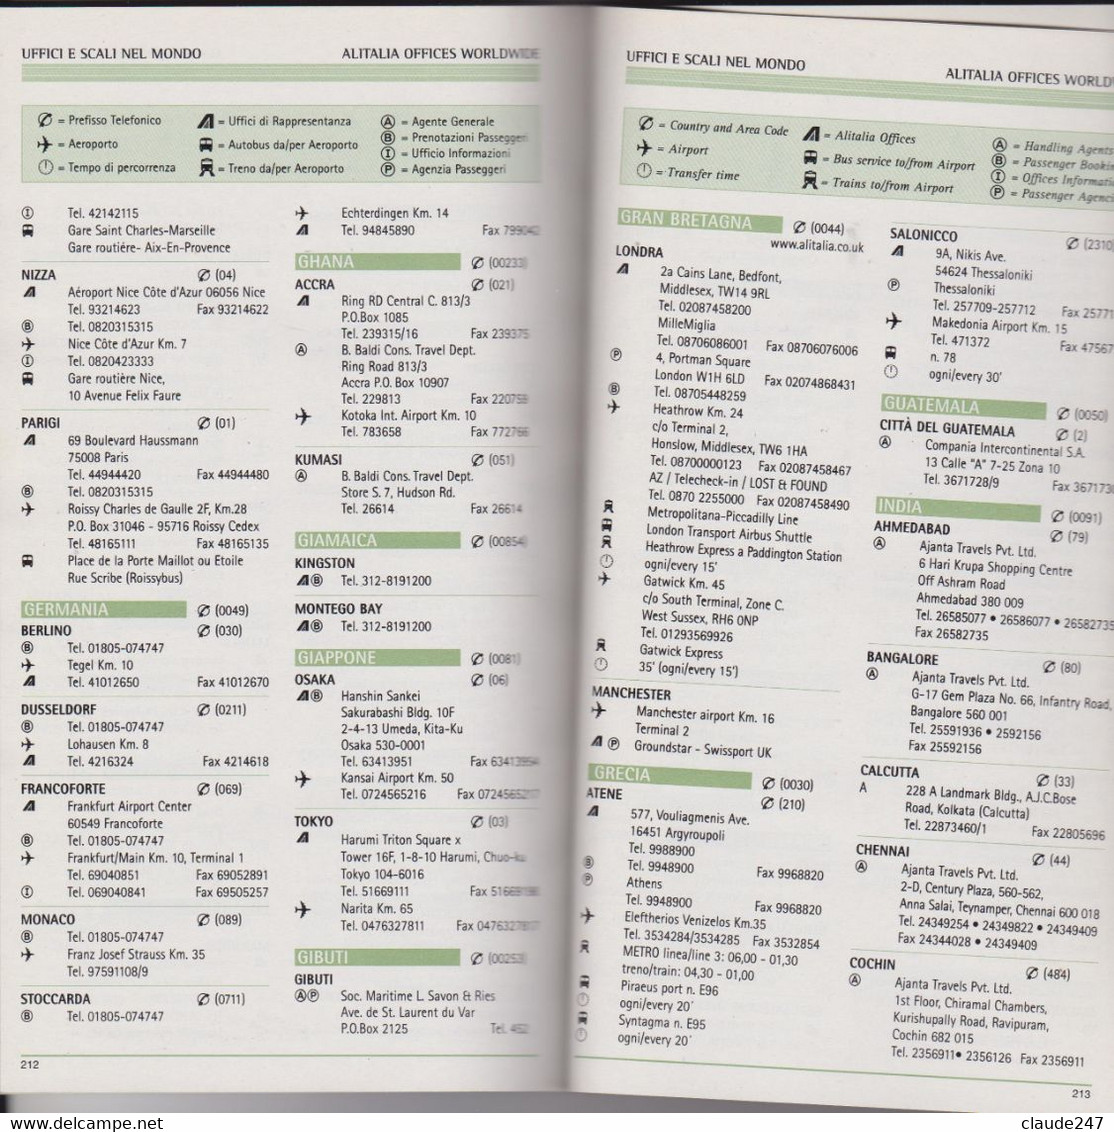 Alitalia Easy Timetable - Orario Generale Periodo Oct 31 2004 26 Mar 2005 - Orari